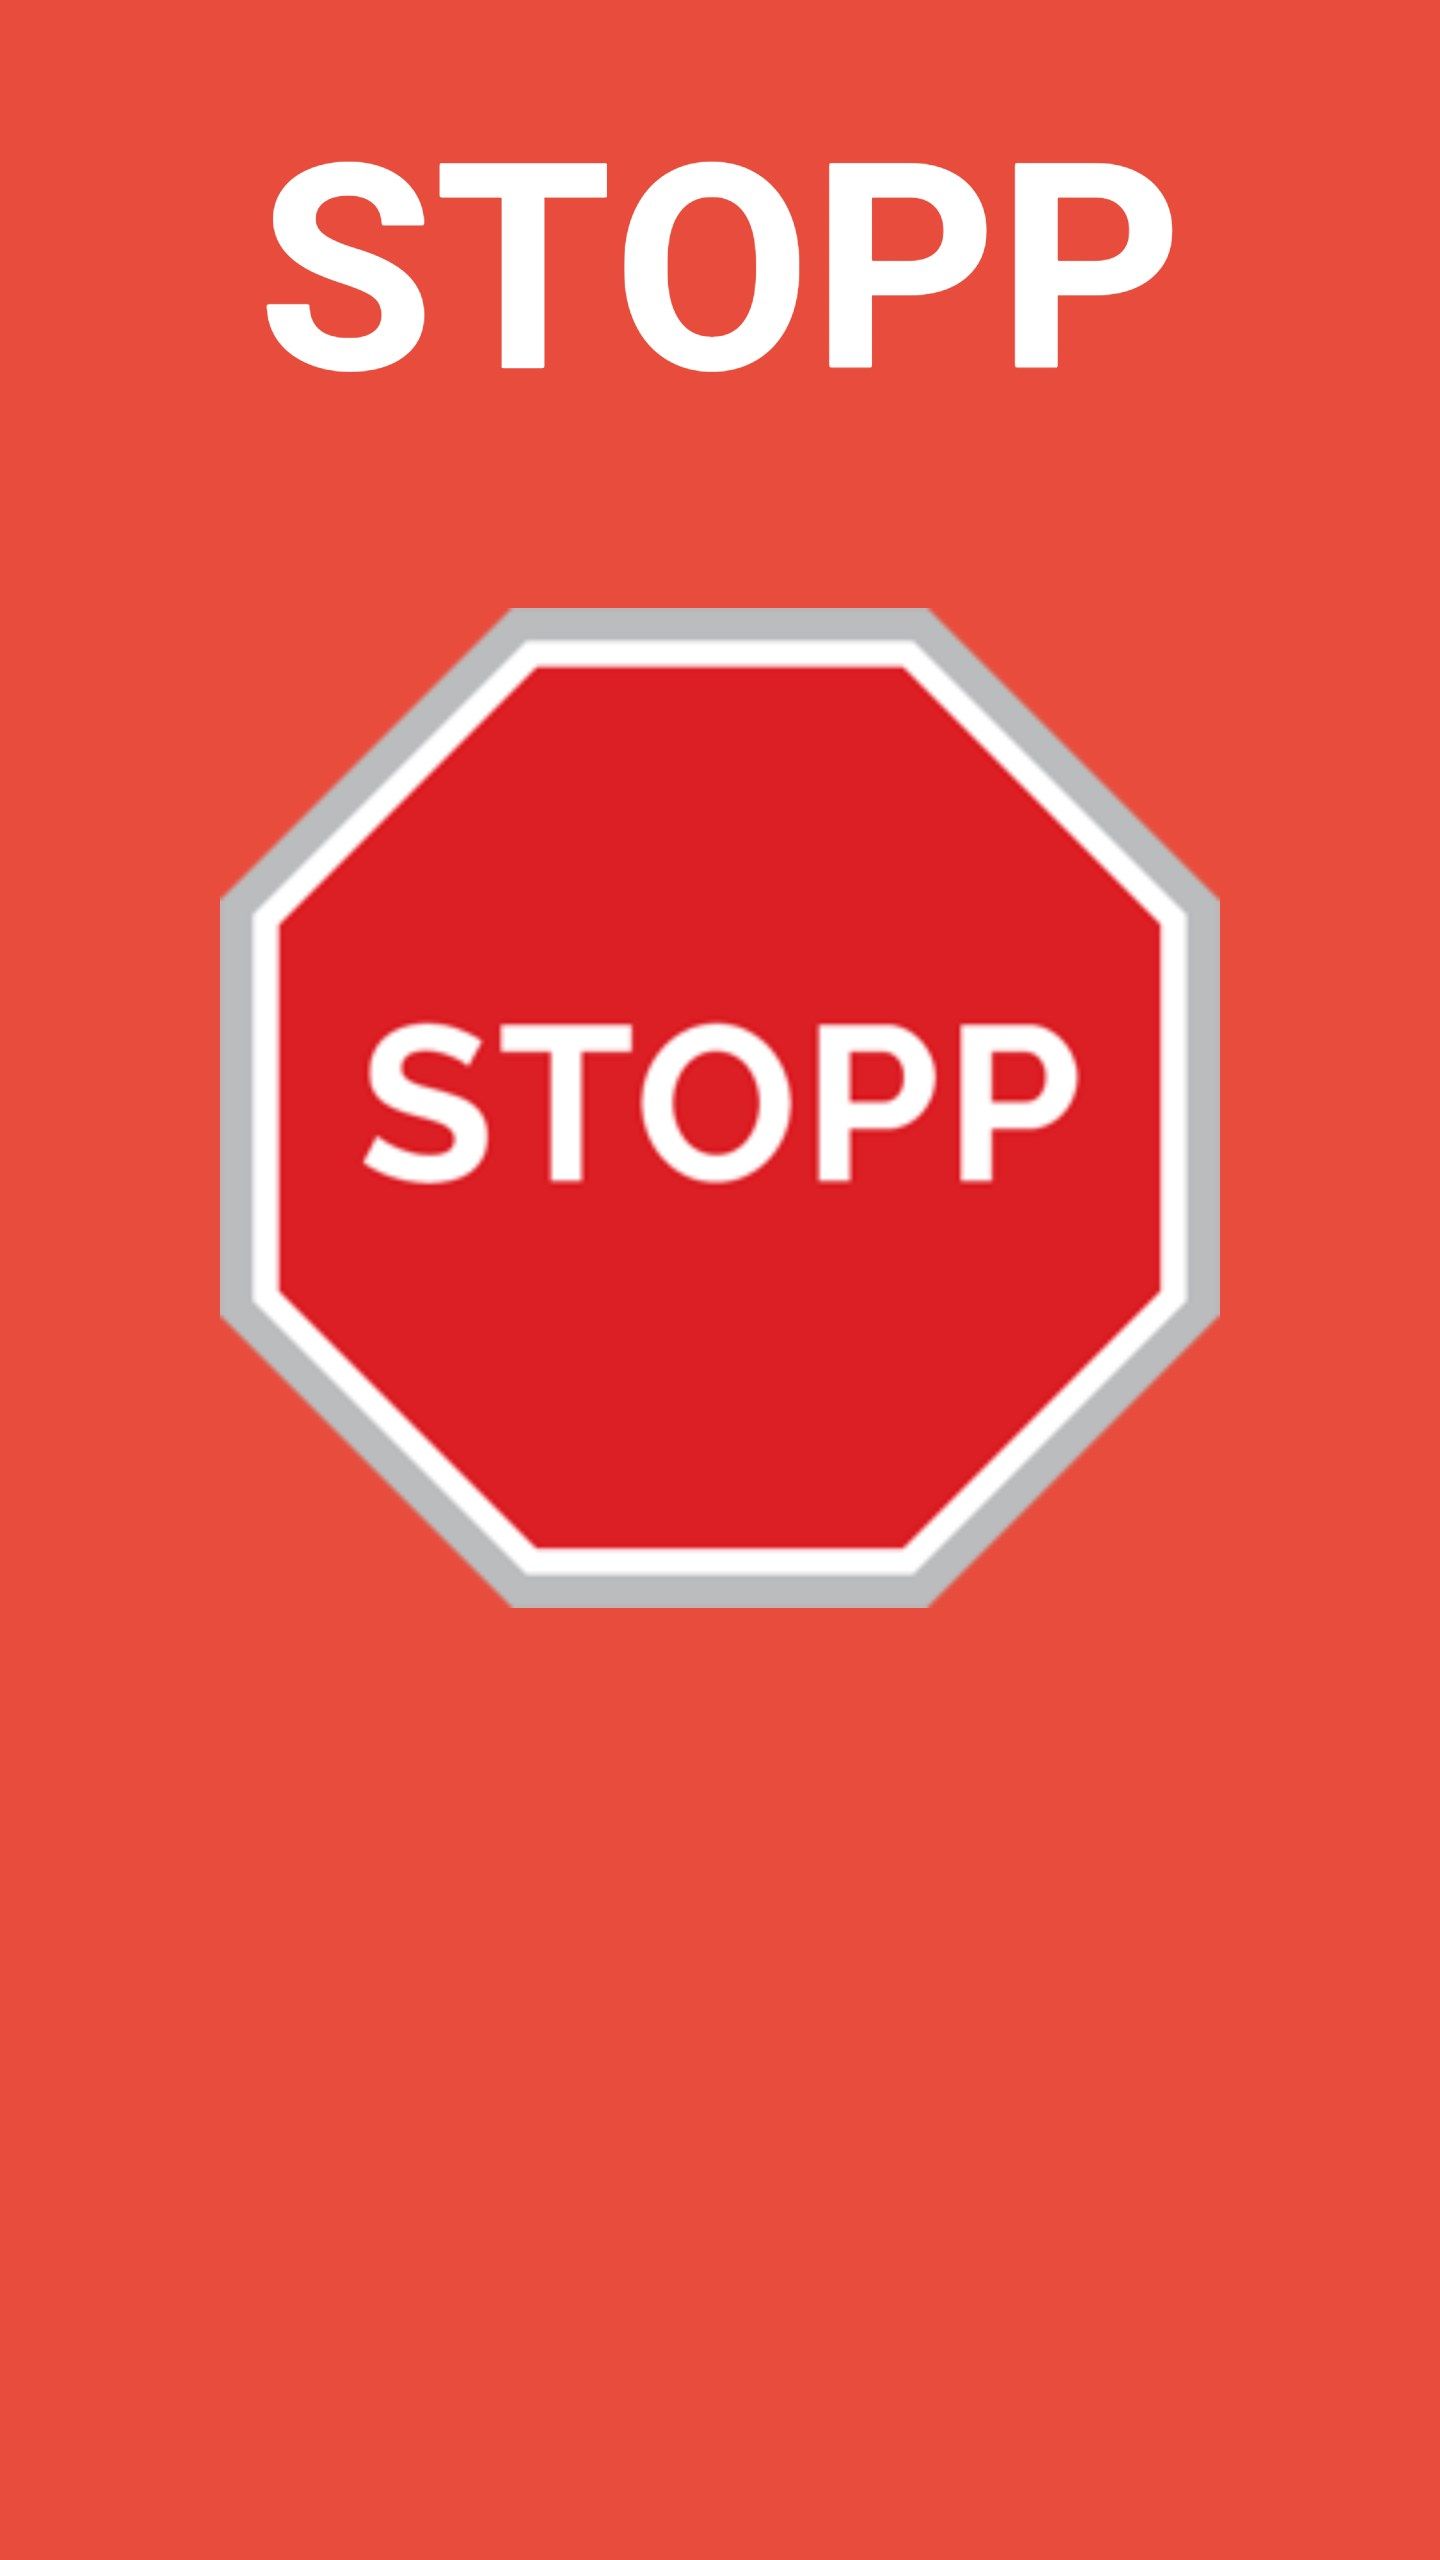 STOPP app